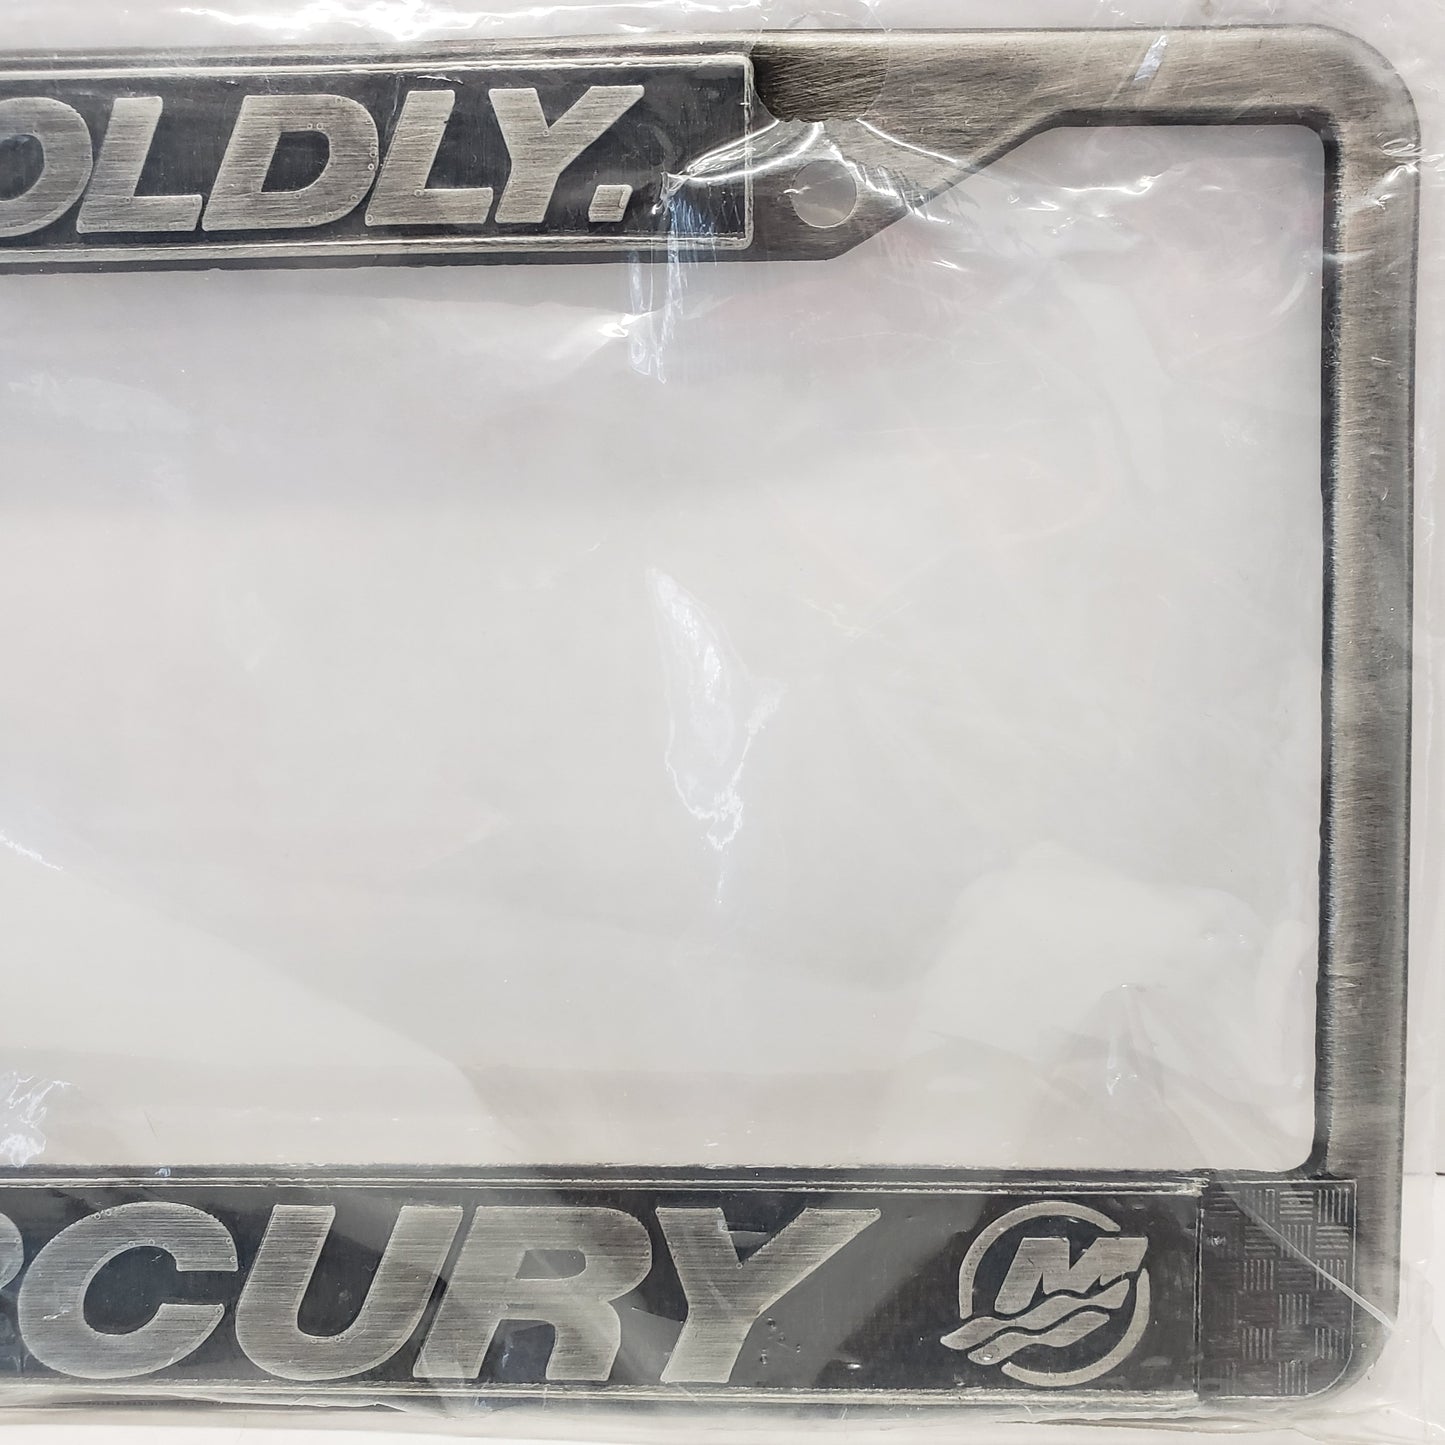 New Authentic Mercury Marine "Go Boldly" License Plate Frame